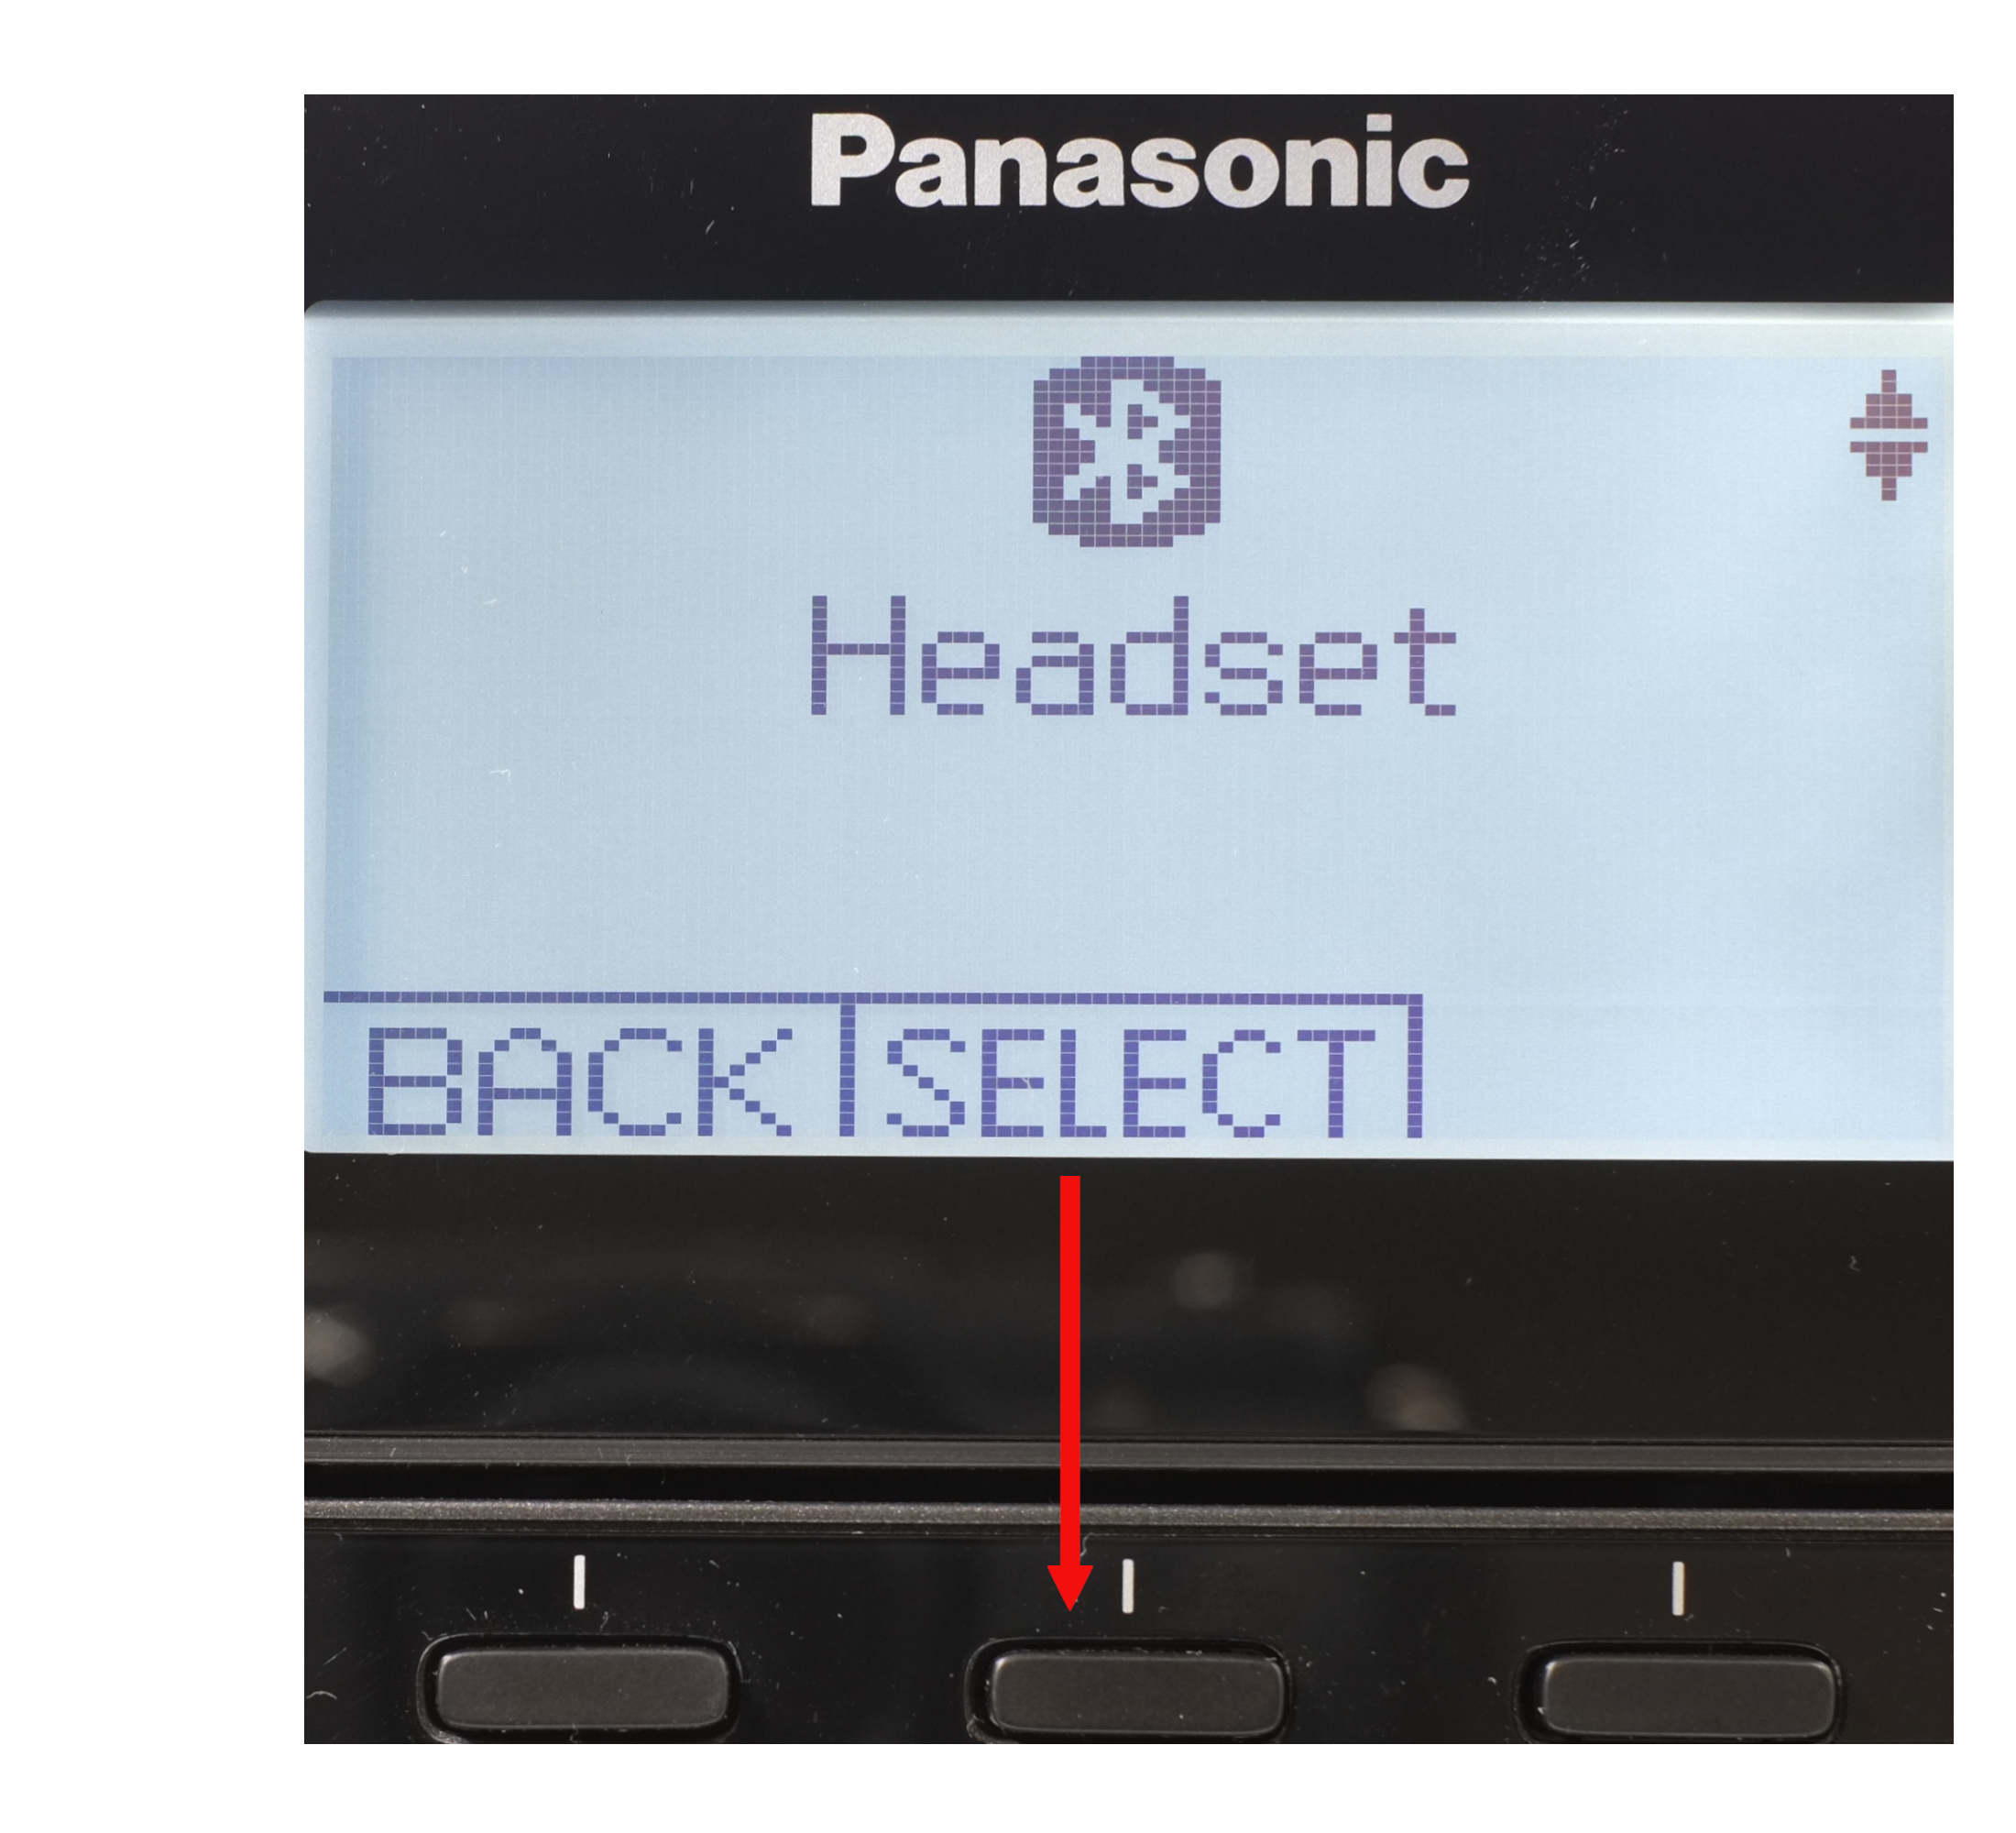 Panasonic phone select headset